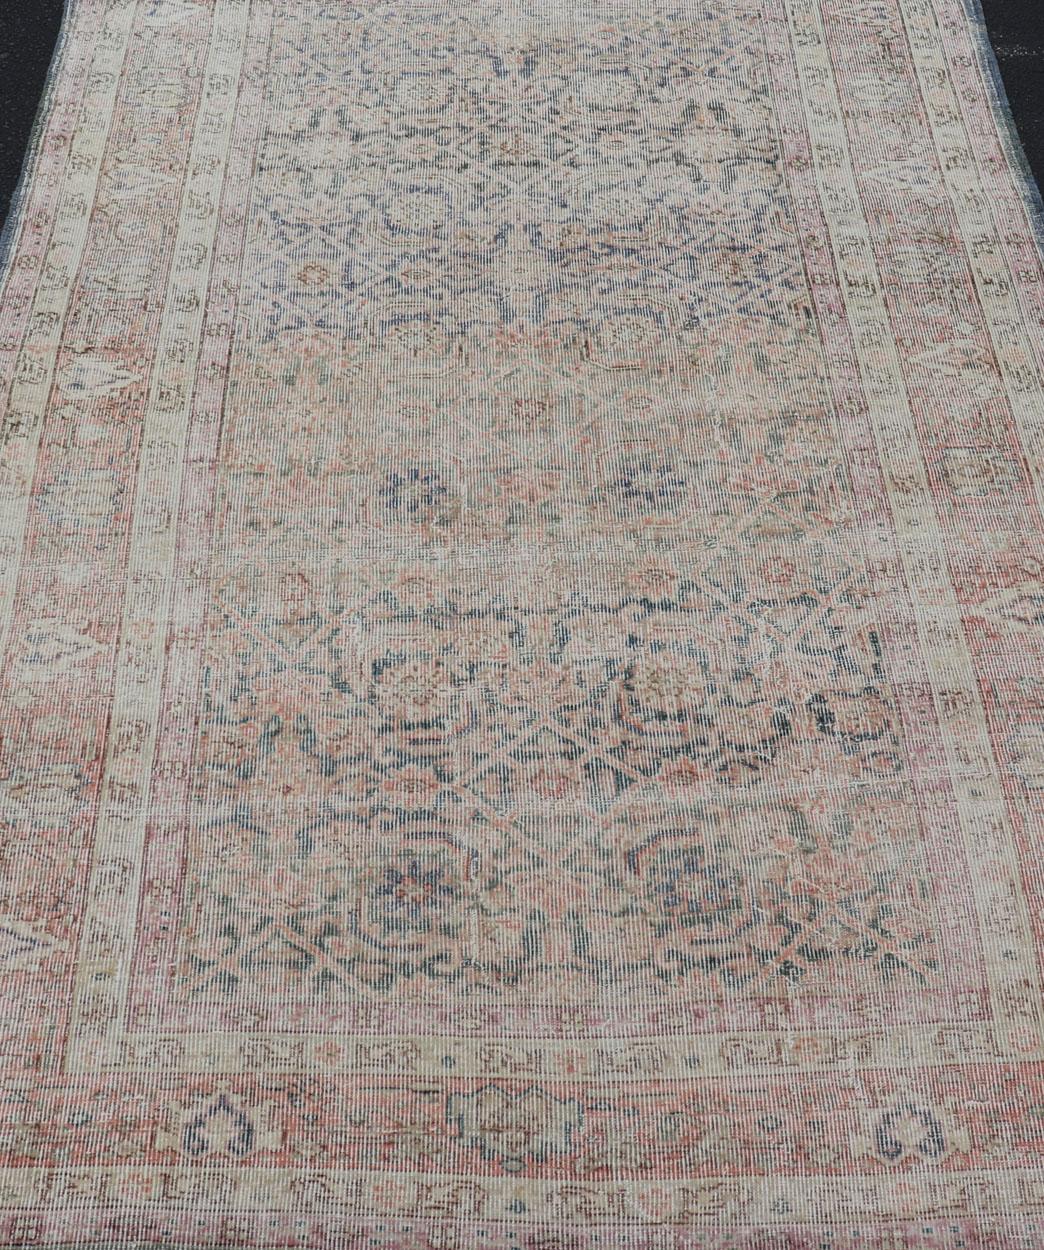 Measures: 5'1 x 7'8.
Antique Persian Malayer rug with all-over design. Keivan Woven Arts / rug EN-178464, country of origin / type: Iran / Hamadan, circa 1920

 early 20th century antique Persian Malayer rug in variegated tan, blue-gray, soft pink